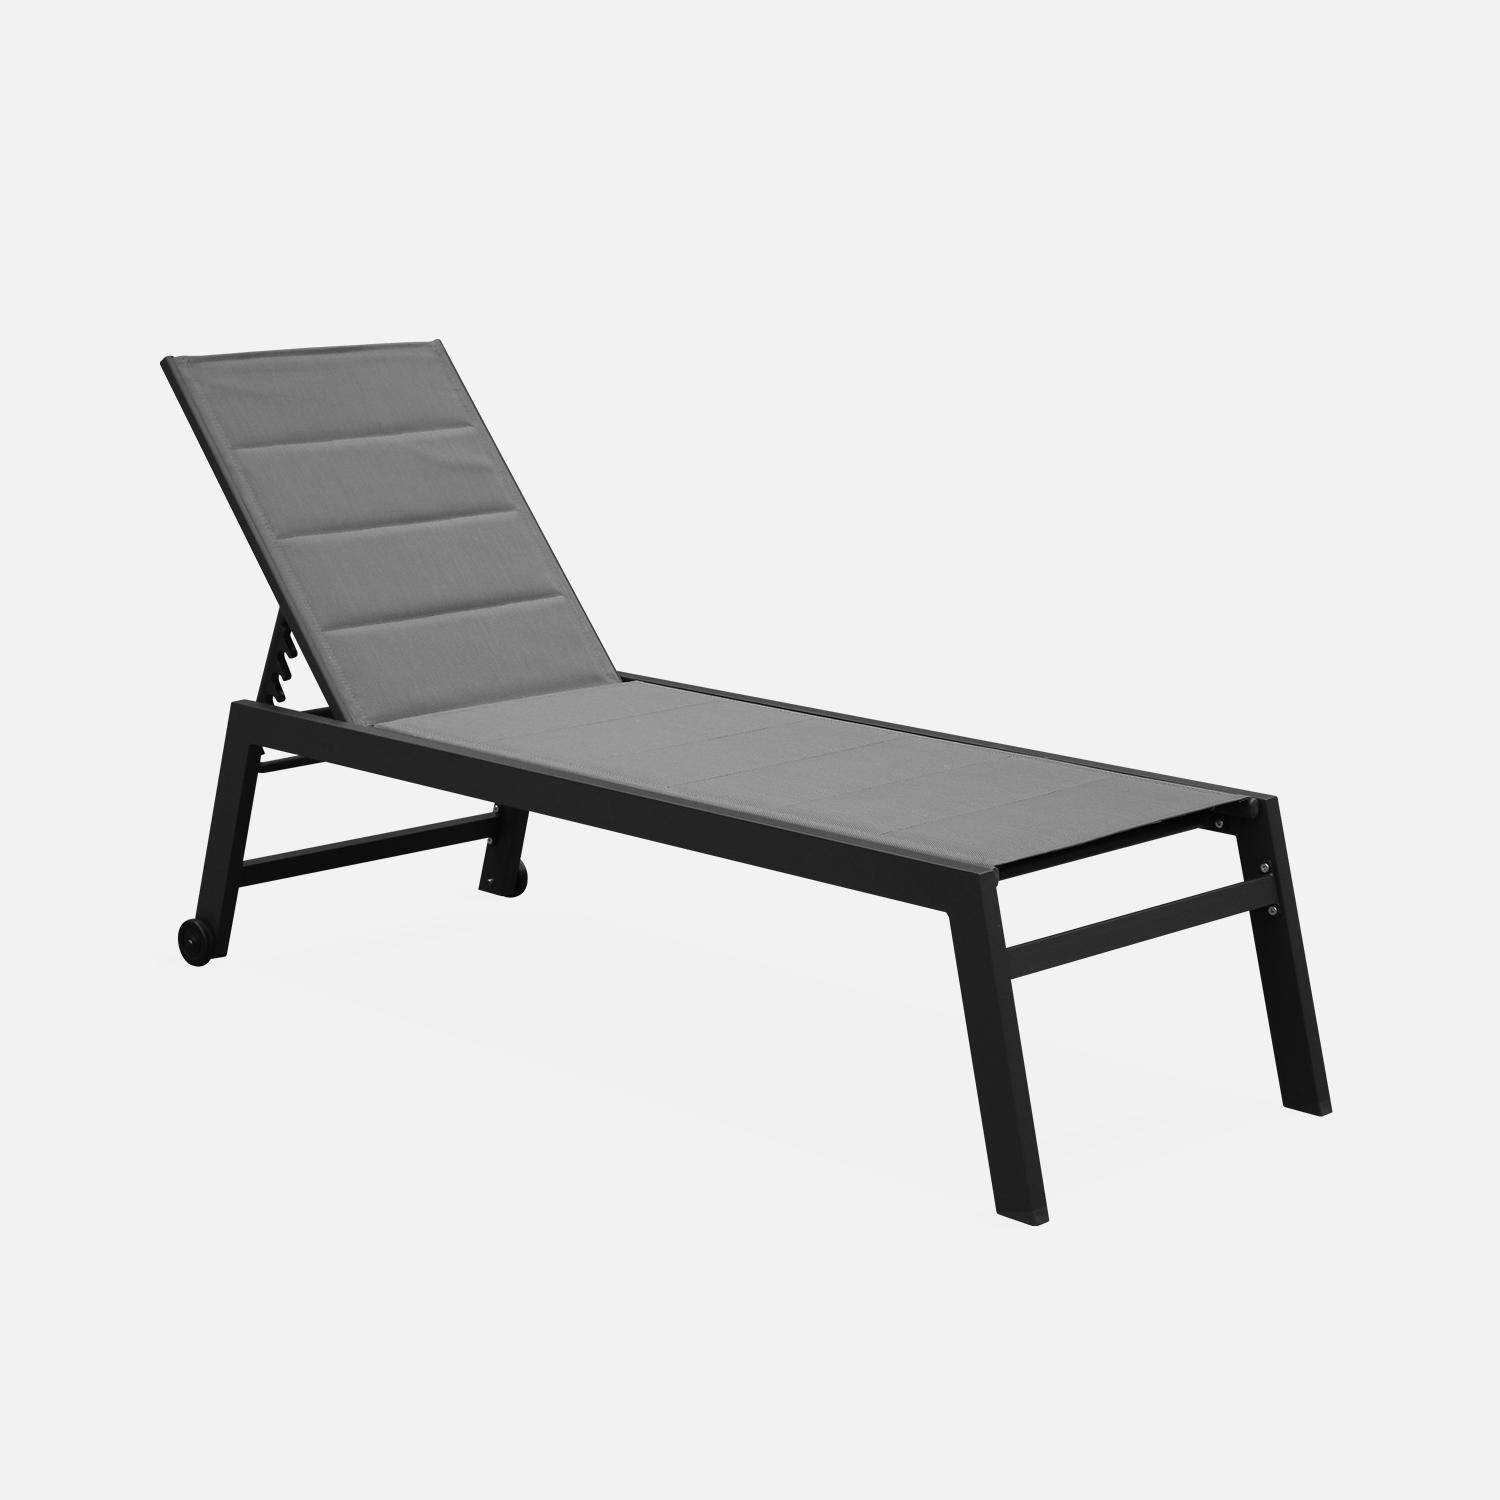 Sun lounger - Solis - Textilene and aluminium sun lounger with 6 positions, anthracite grey frame, grey textilene Photo3